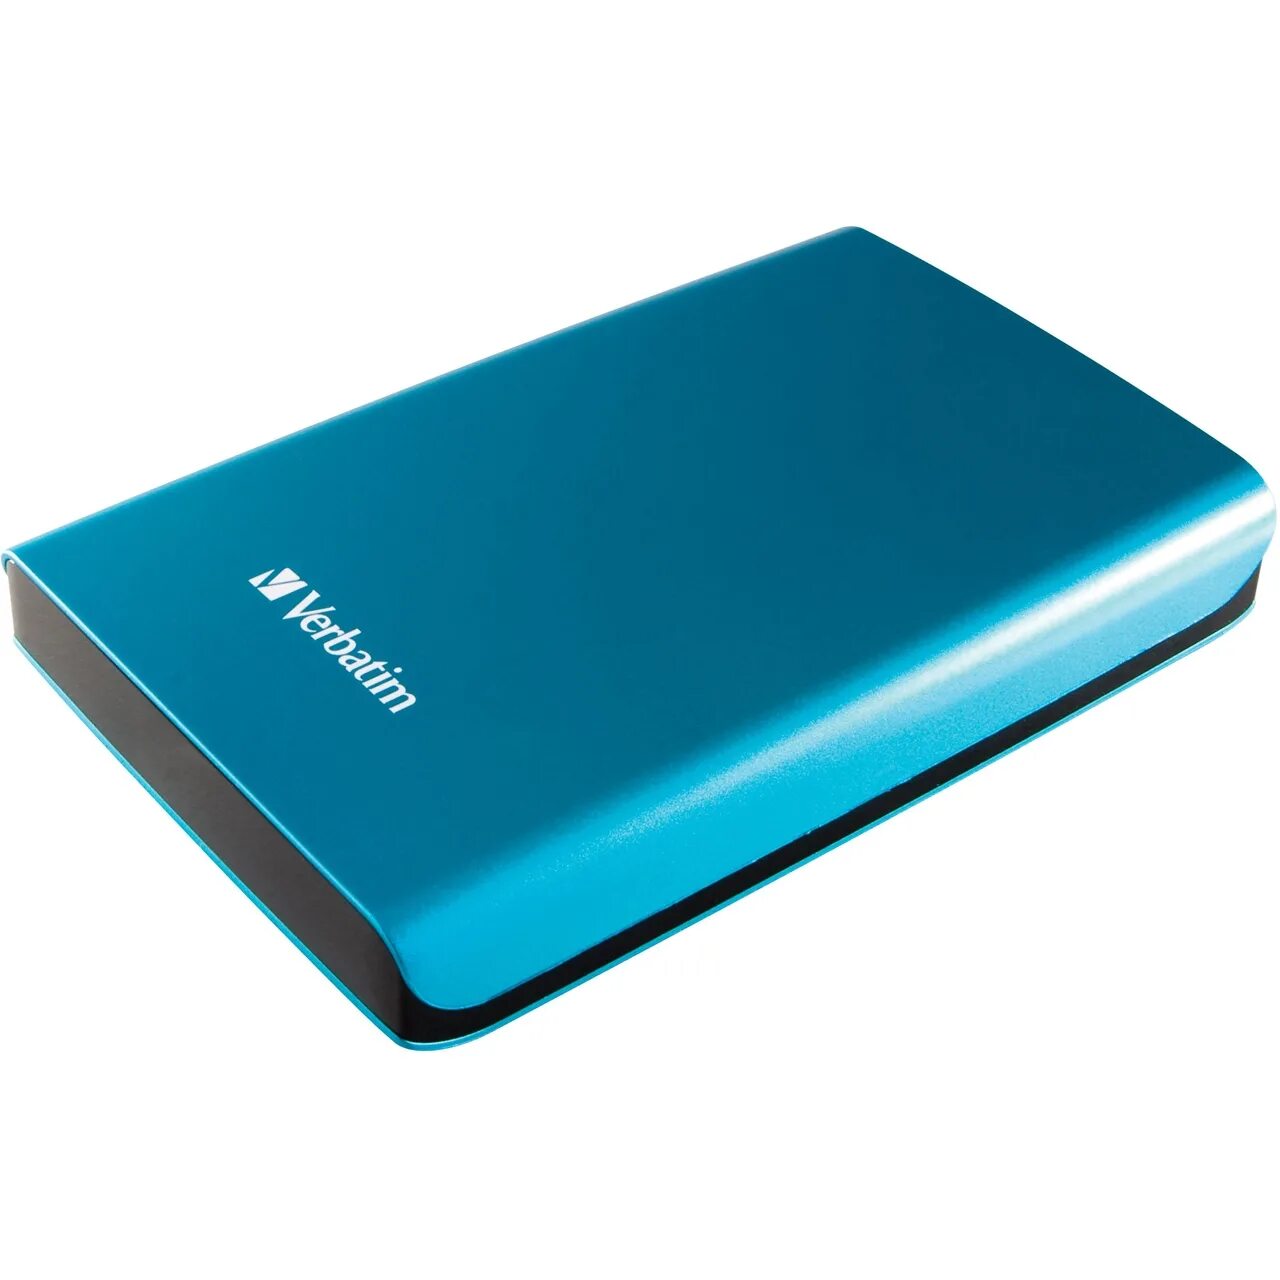 Портативный жесткий 1. Внешний HDD Verbatim Store 'n' go USB 3.0 500 ГБ. Внешний жесткий диск Verbatim 2tb. Внешний HDD Verbatim Store 'n' go USB 3.0 1.5 ТБ. Внешний жесткий диск 1 ТБ Transcend синий.